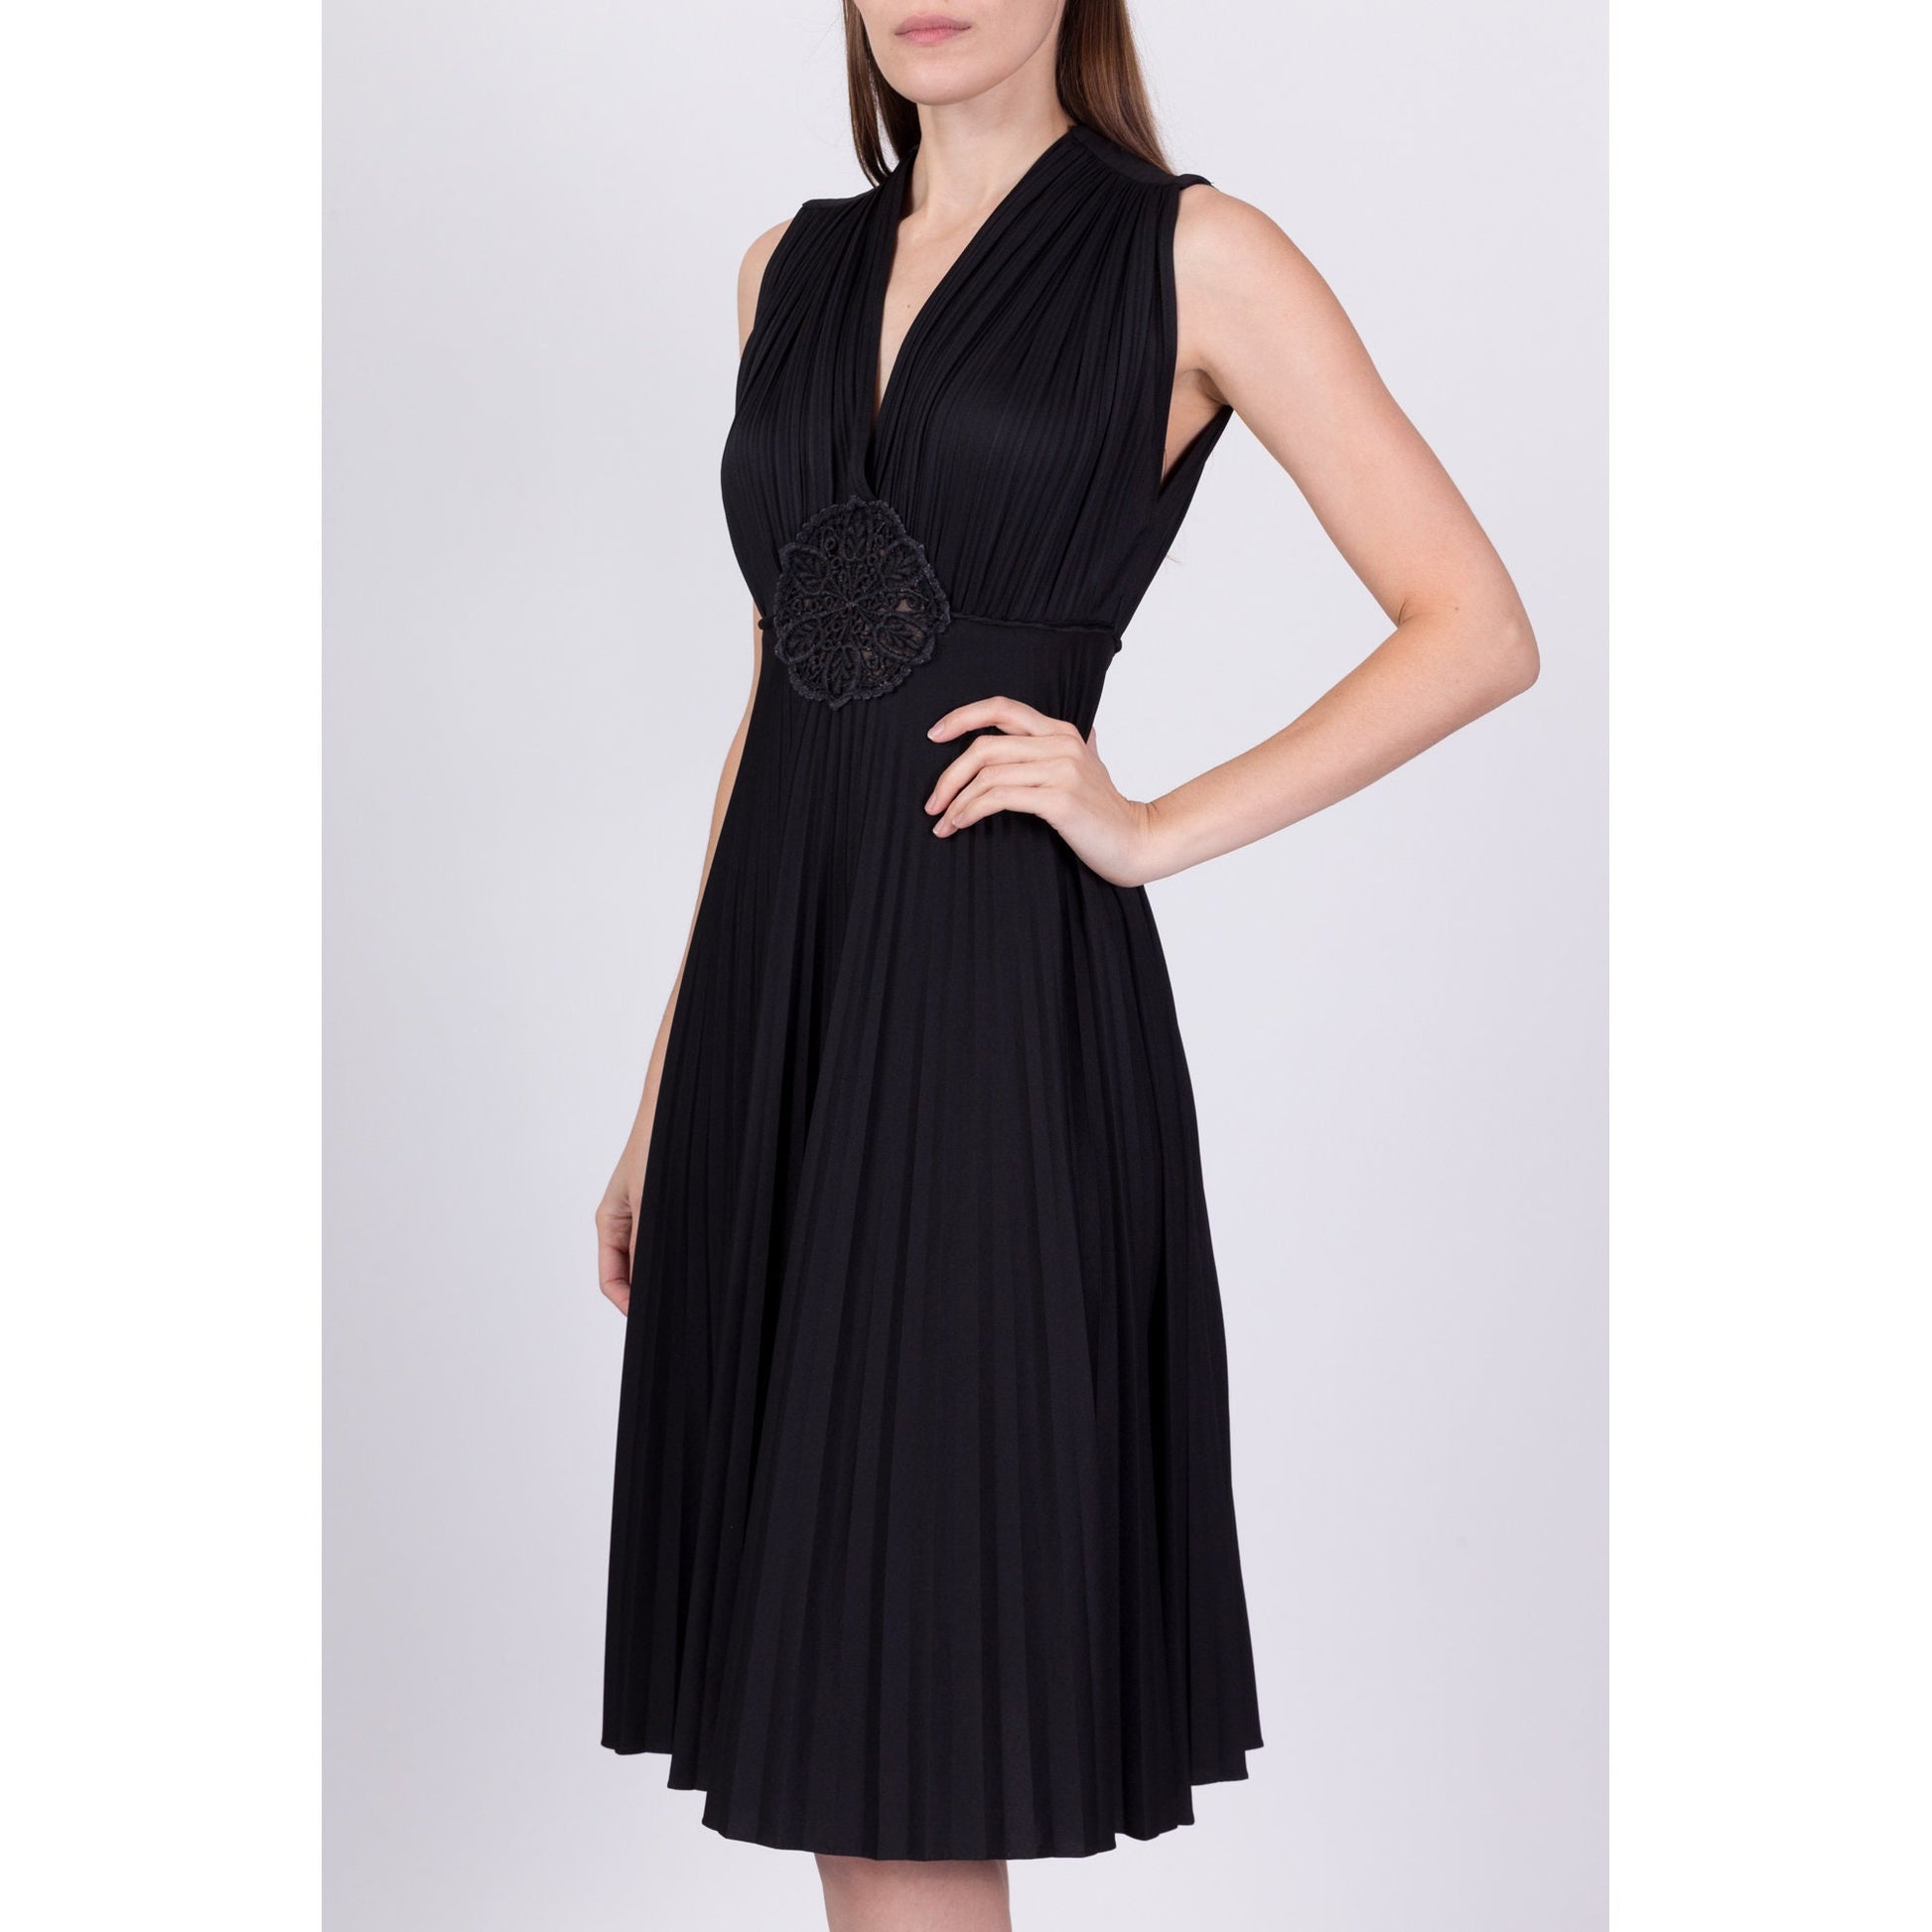 70s Boho Black Crochet Trim Pleated Dress - Small to Medium 